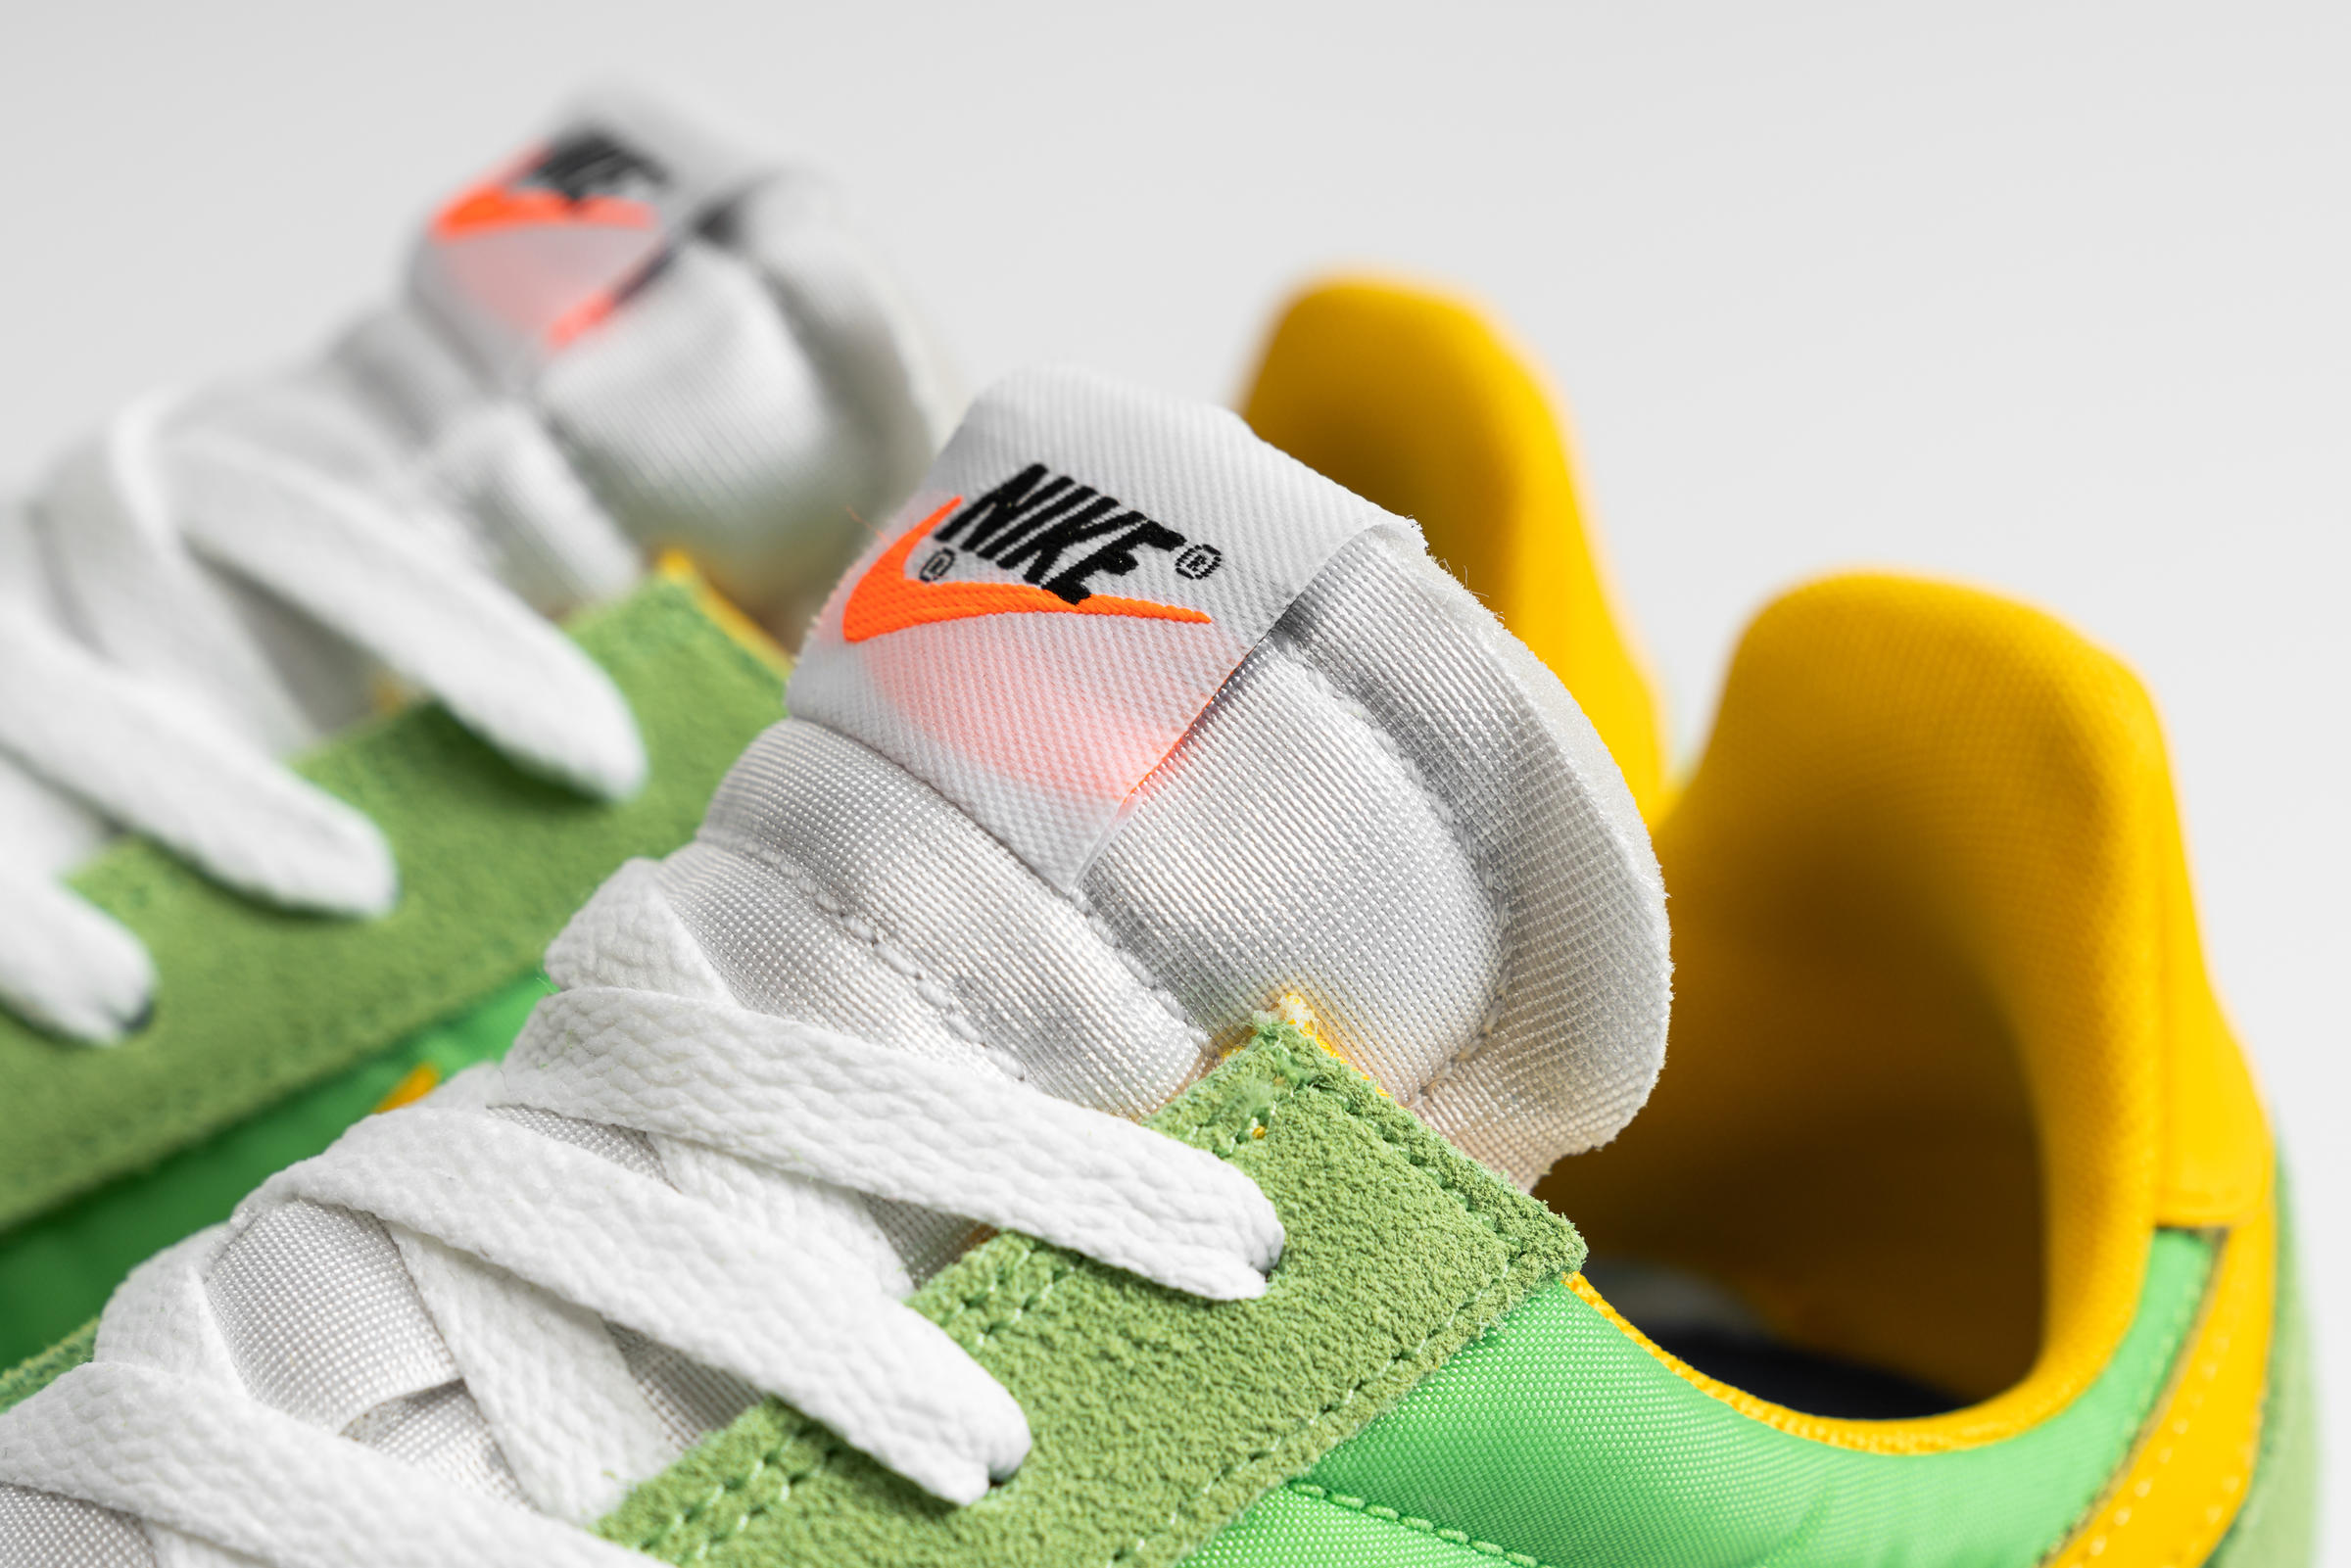 Nike WAFFLE RACER "Green Nebula"